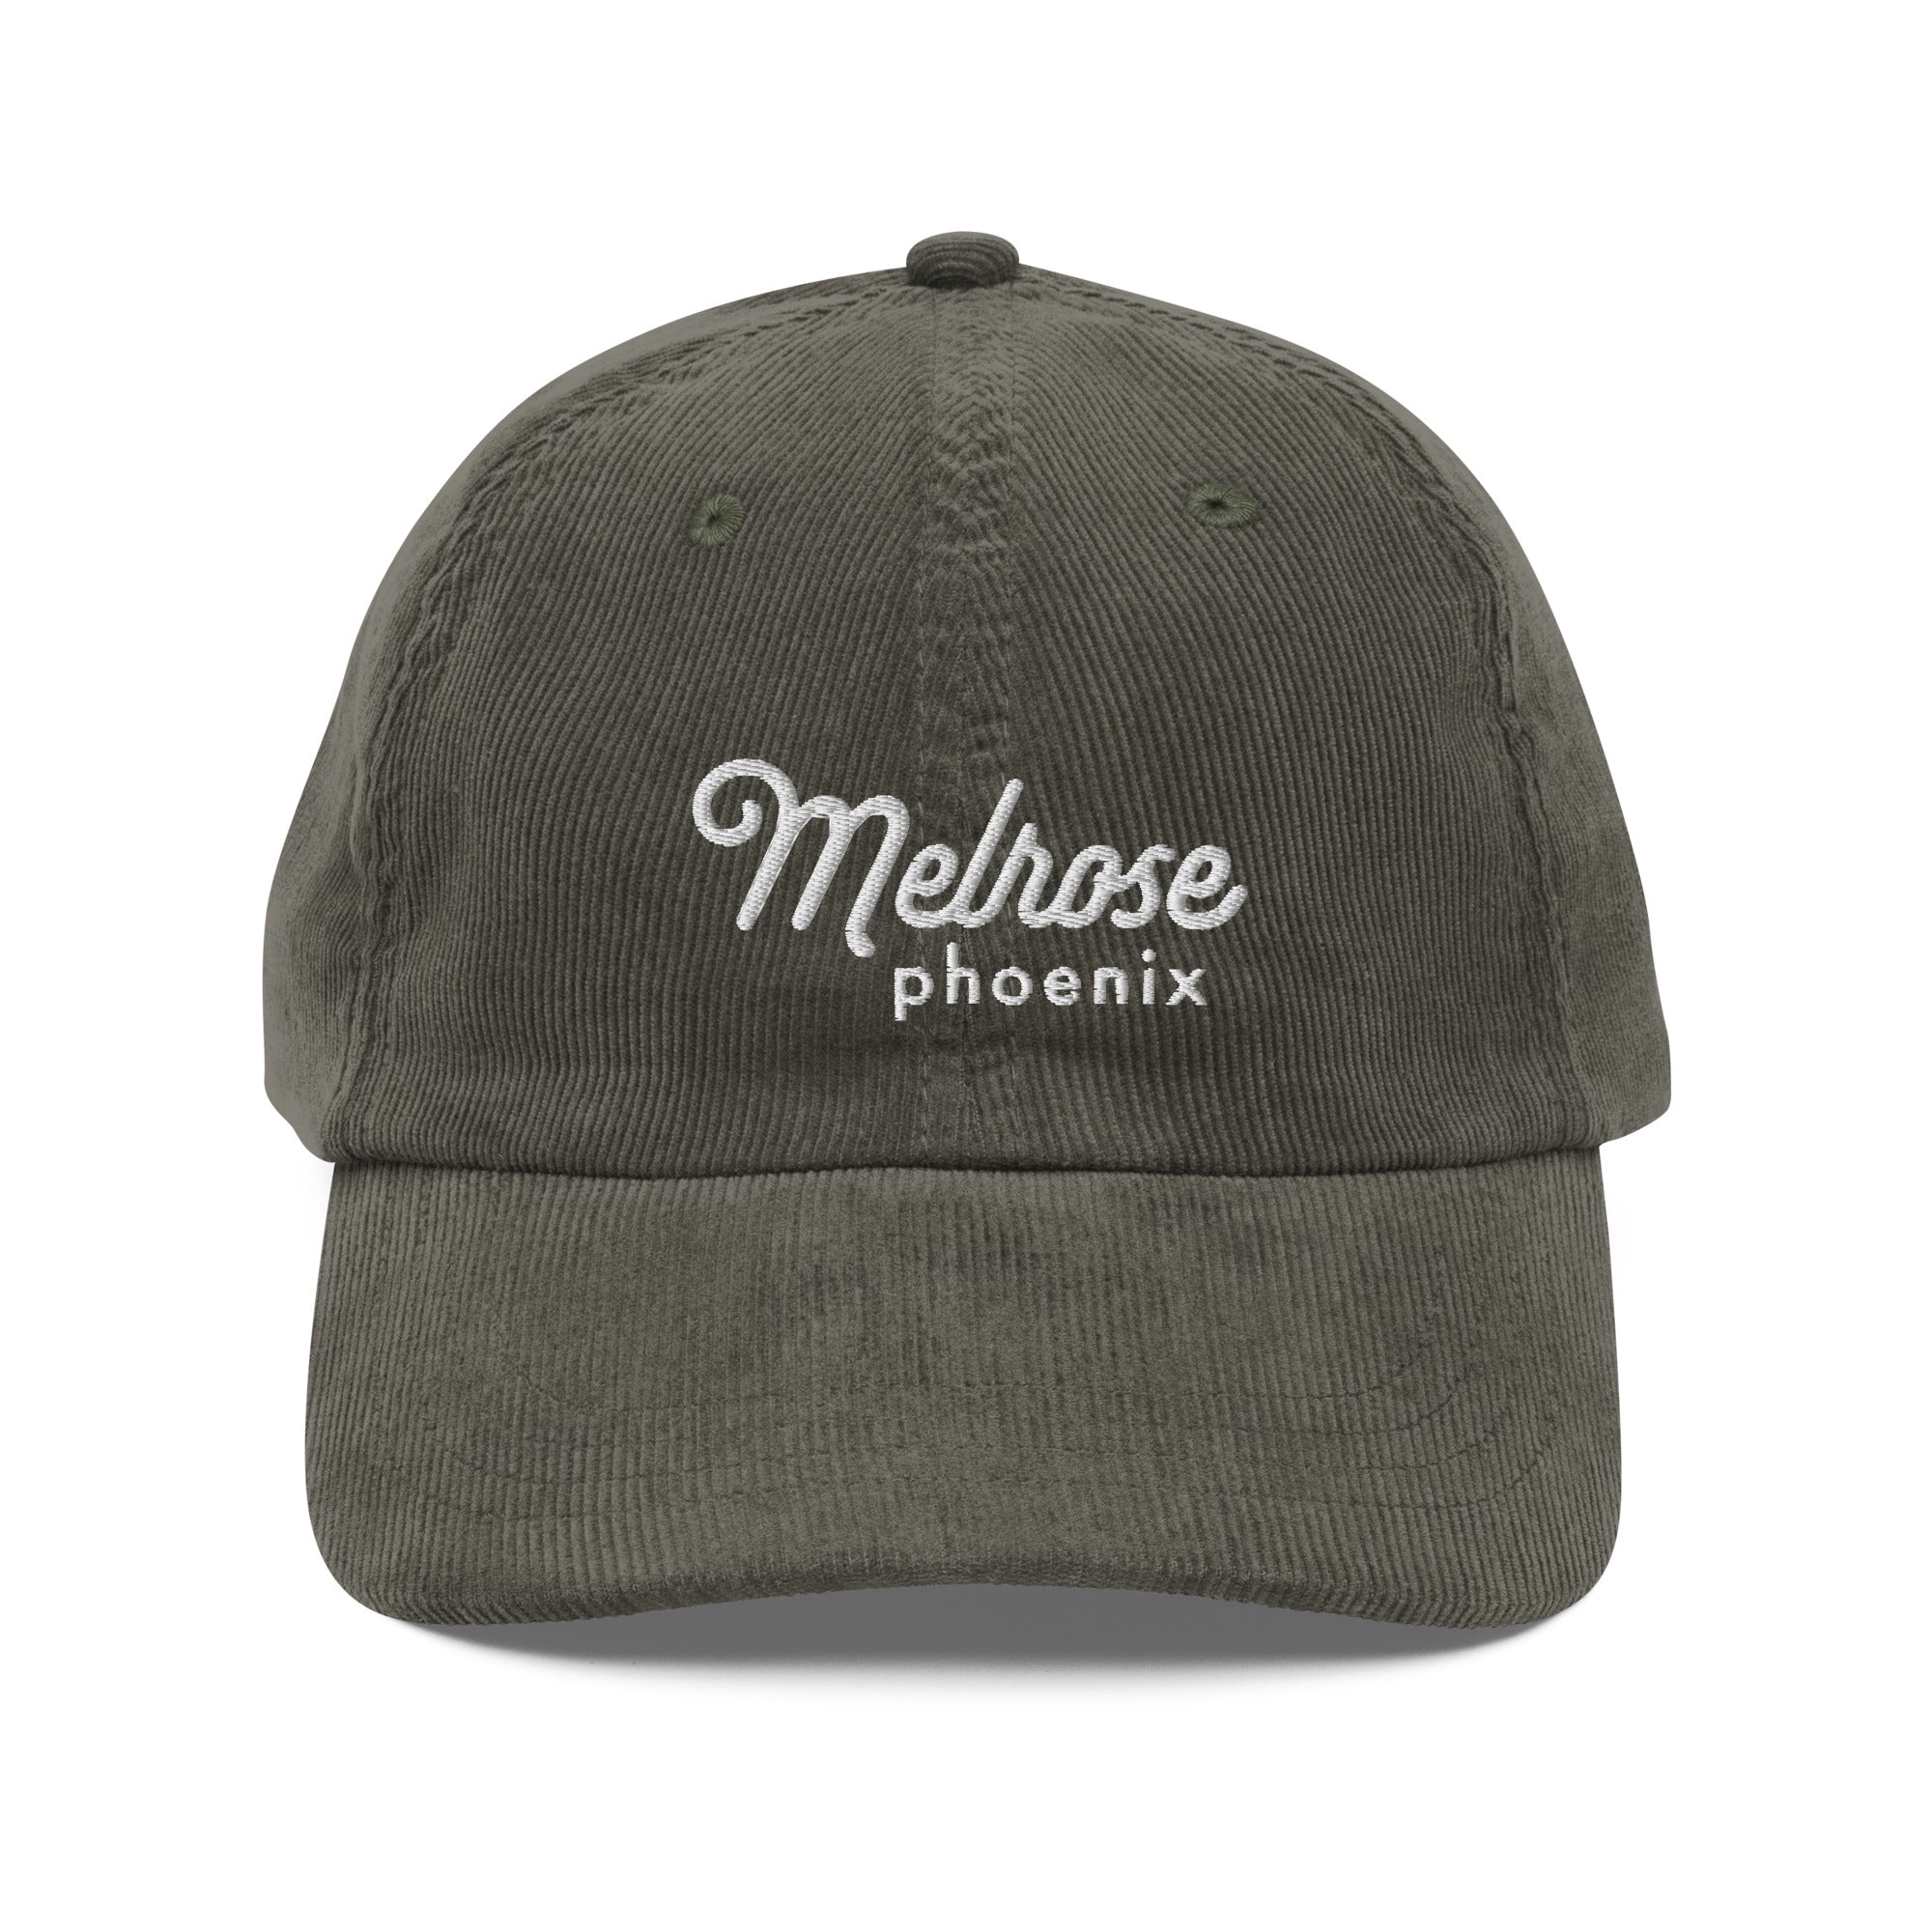 Script Corduroy Hat - Melrose | Phoenix, AZ